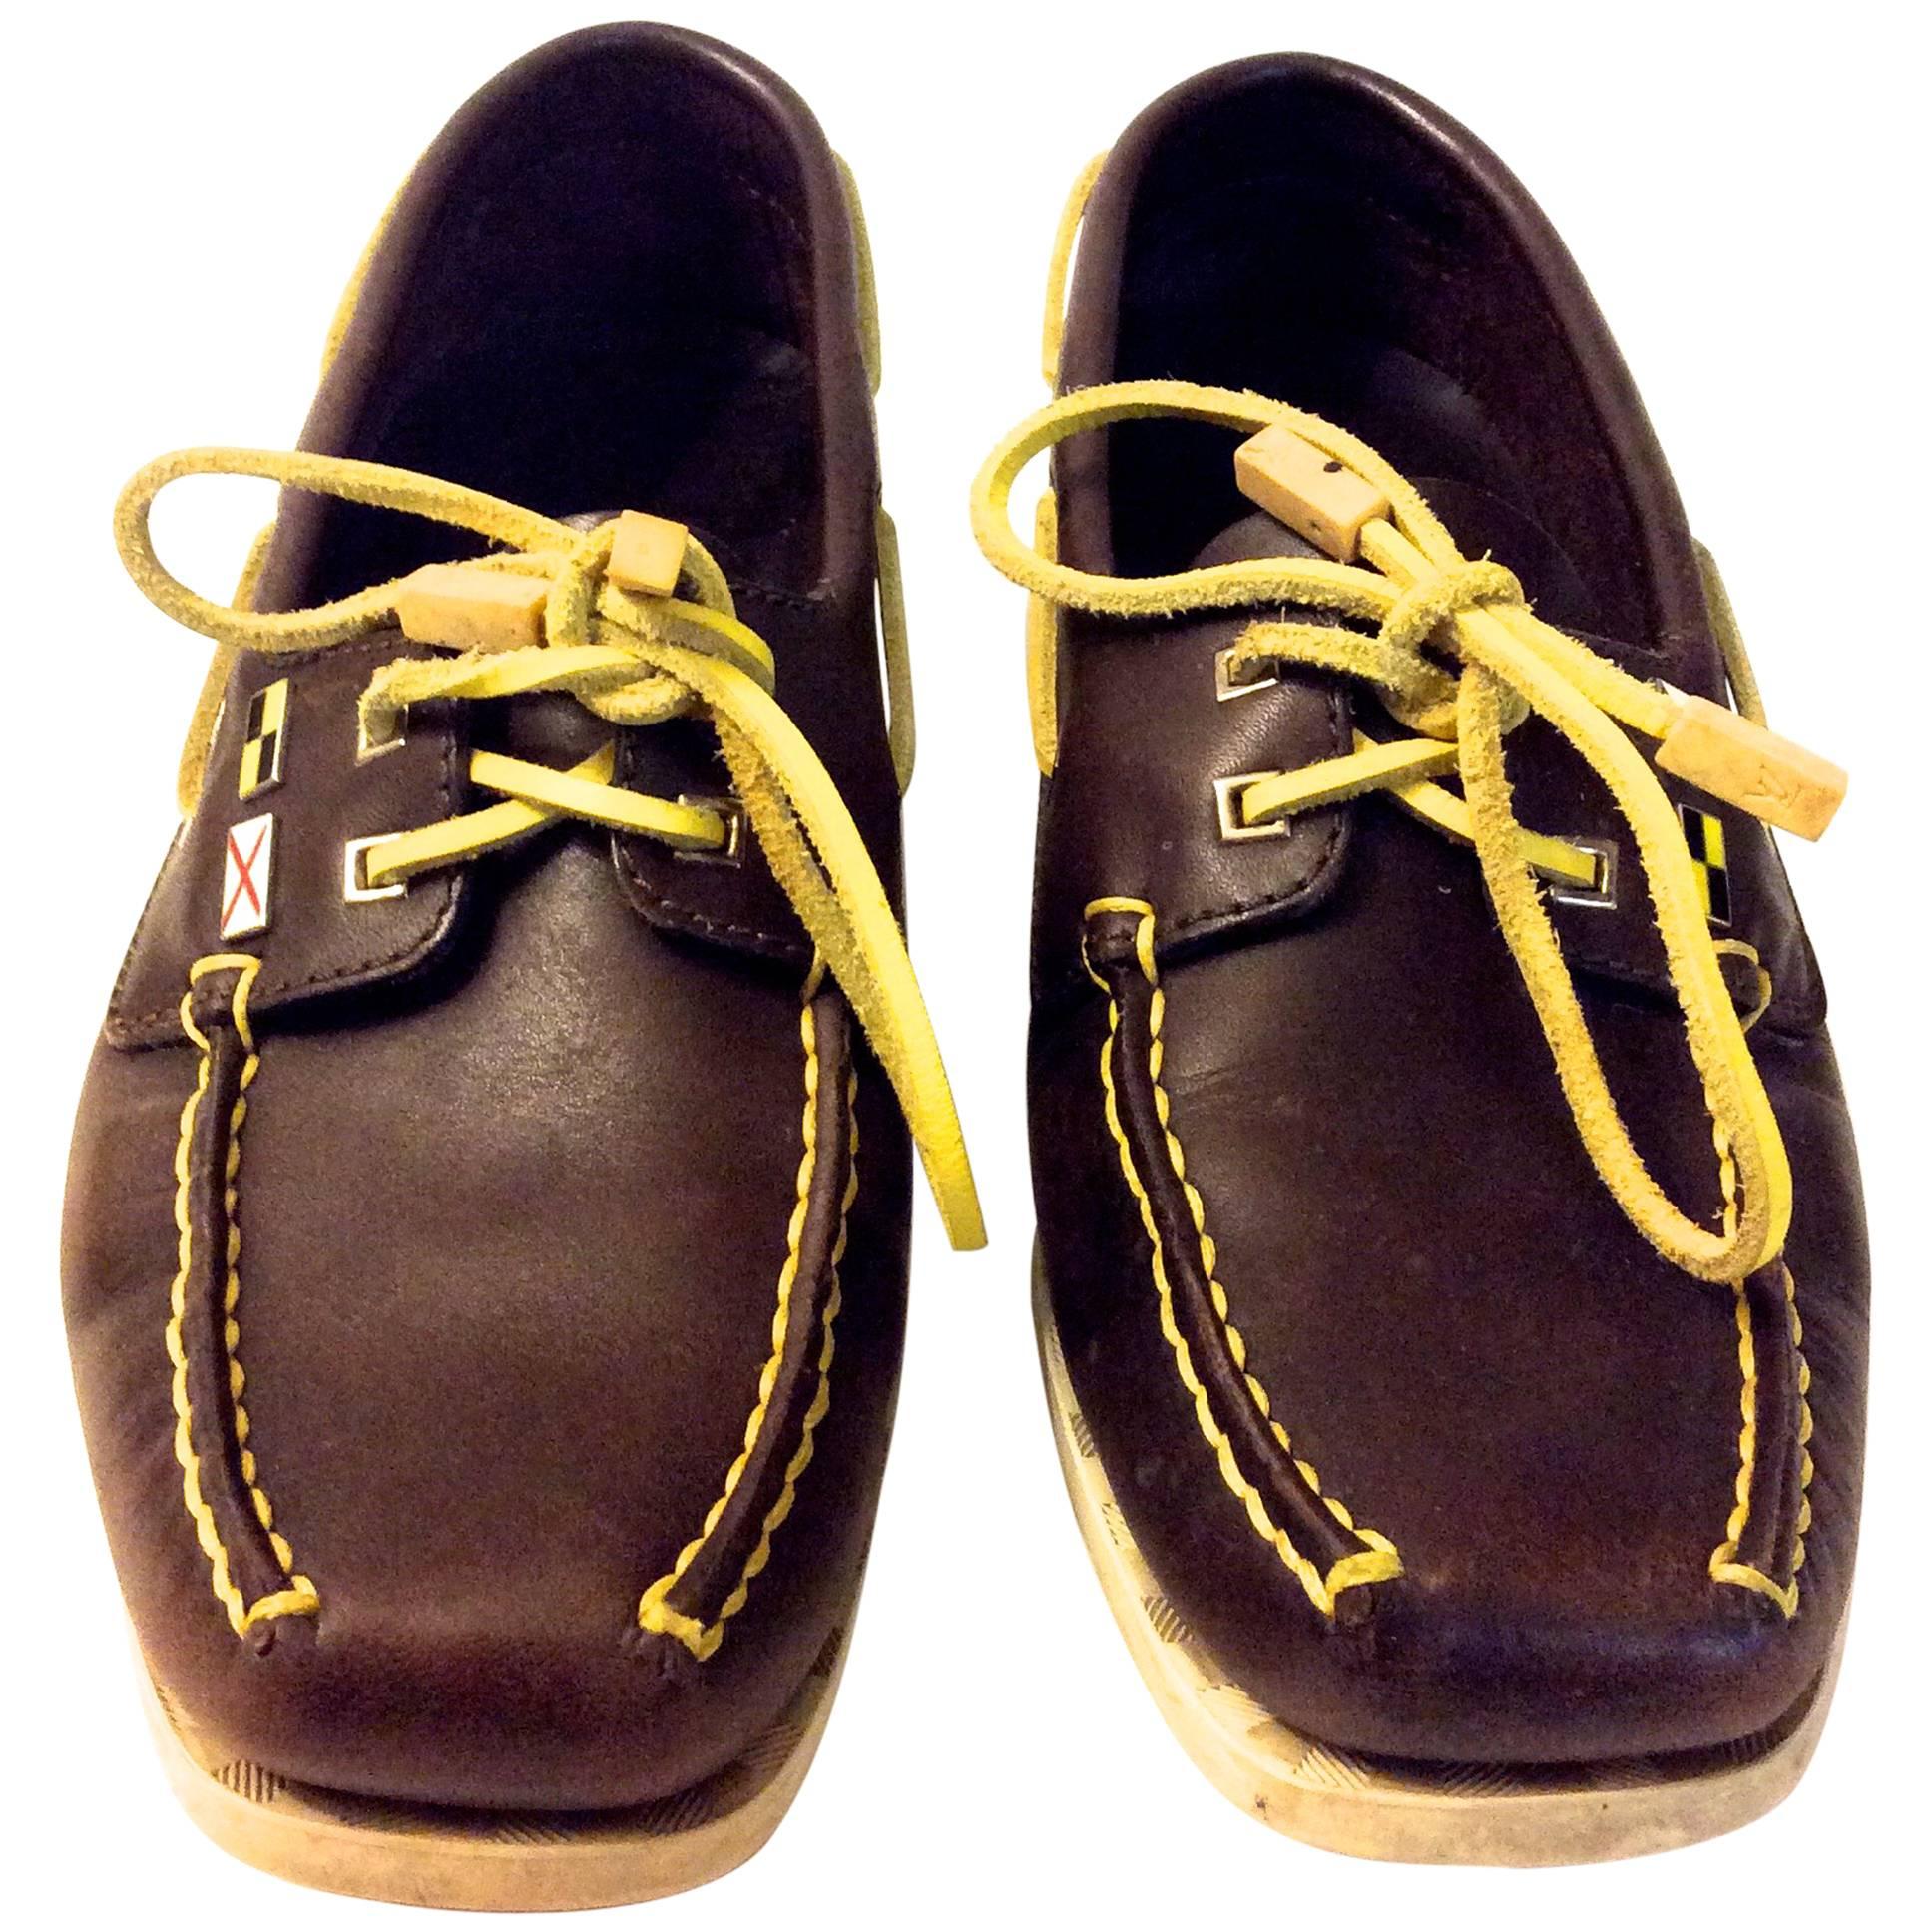 Rare Louis Vuitton Dock Sider Shoes - Size 37.5 For Sale